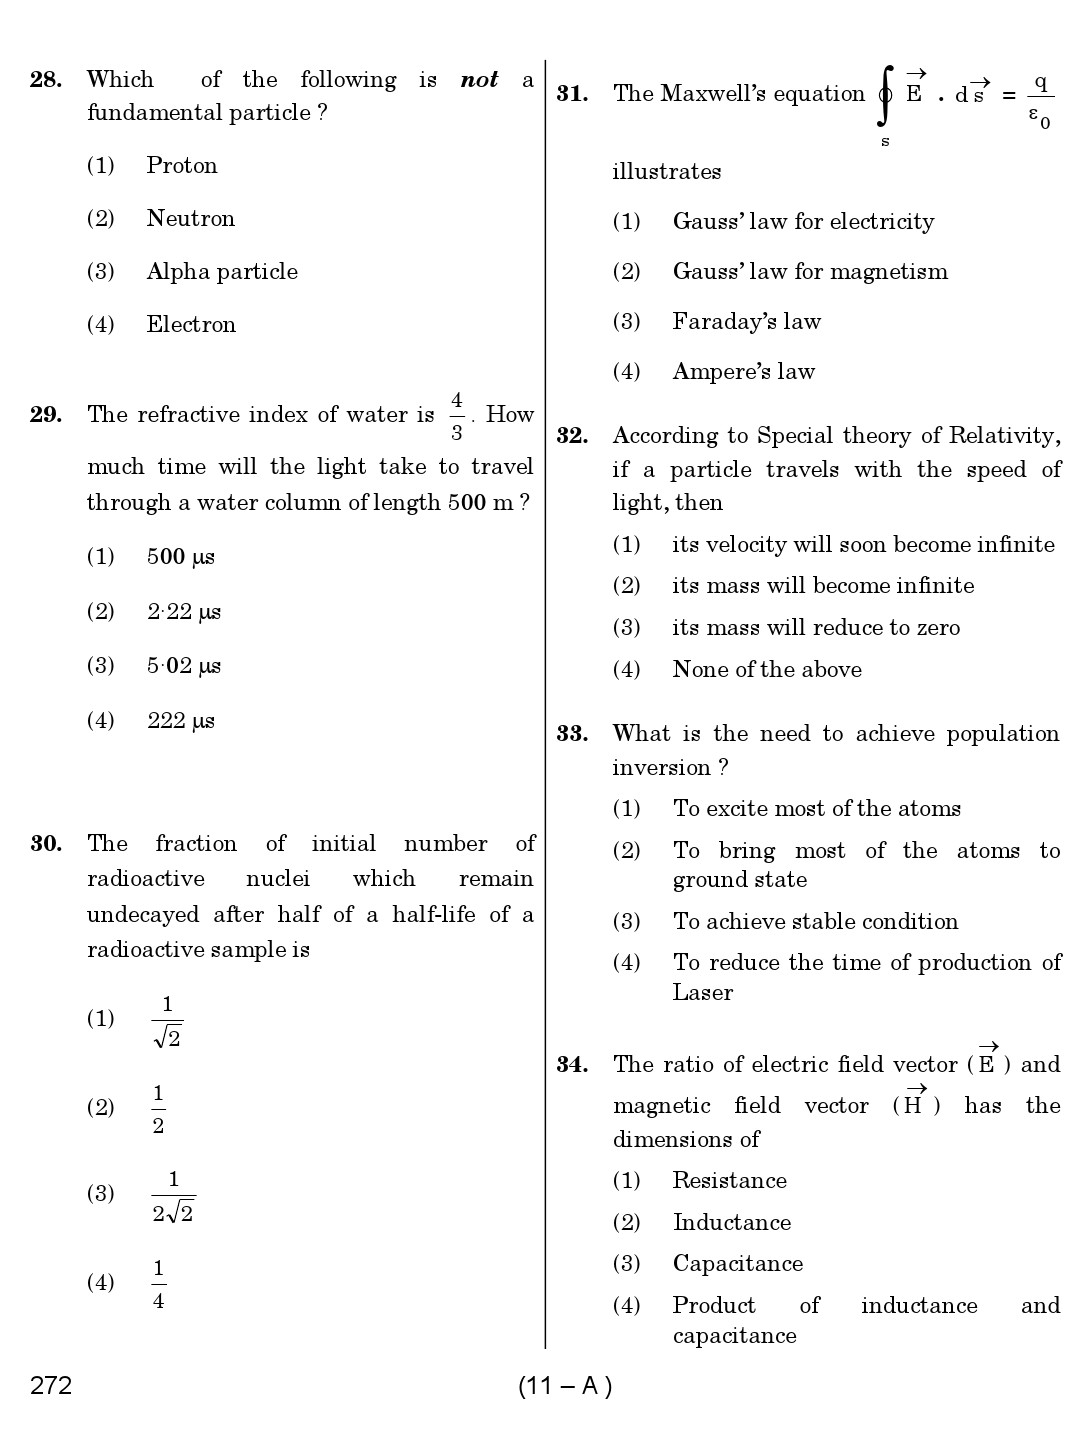 Karnataka PSC Mathematics Teacher Exam Sample Question Paper Subject code 272 11